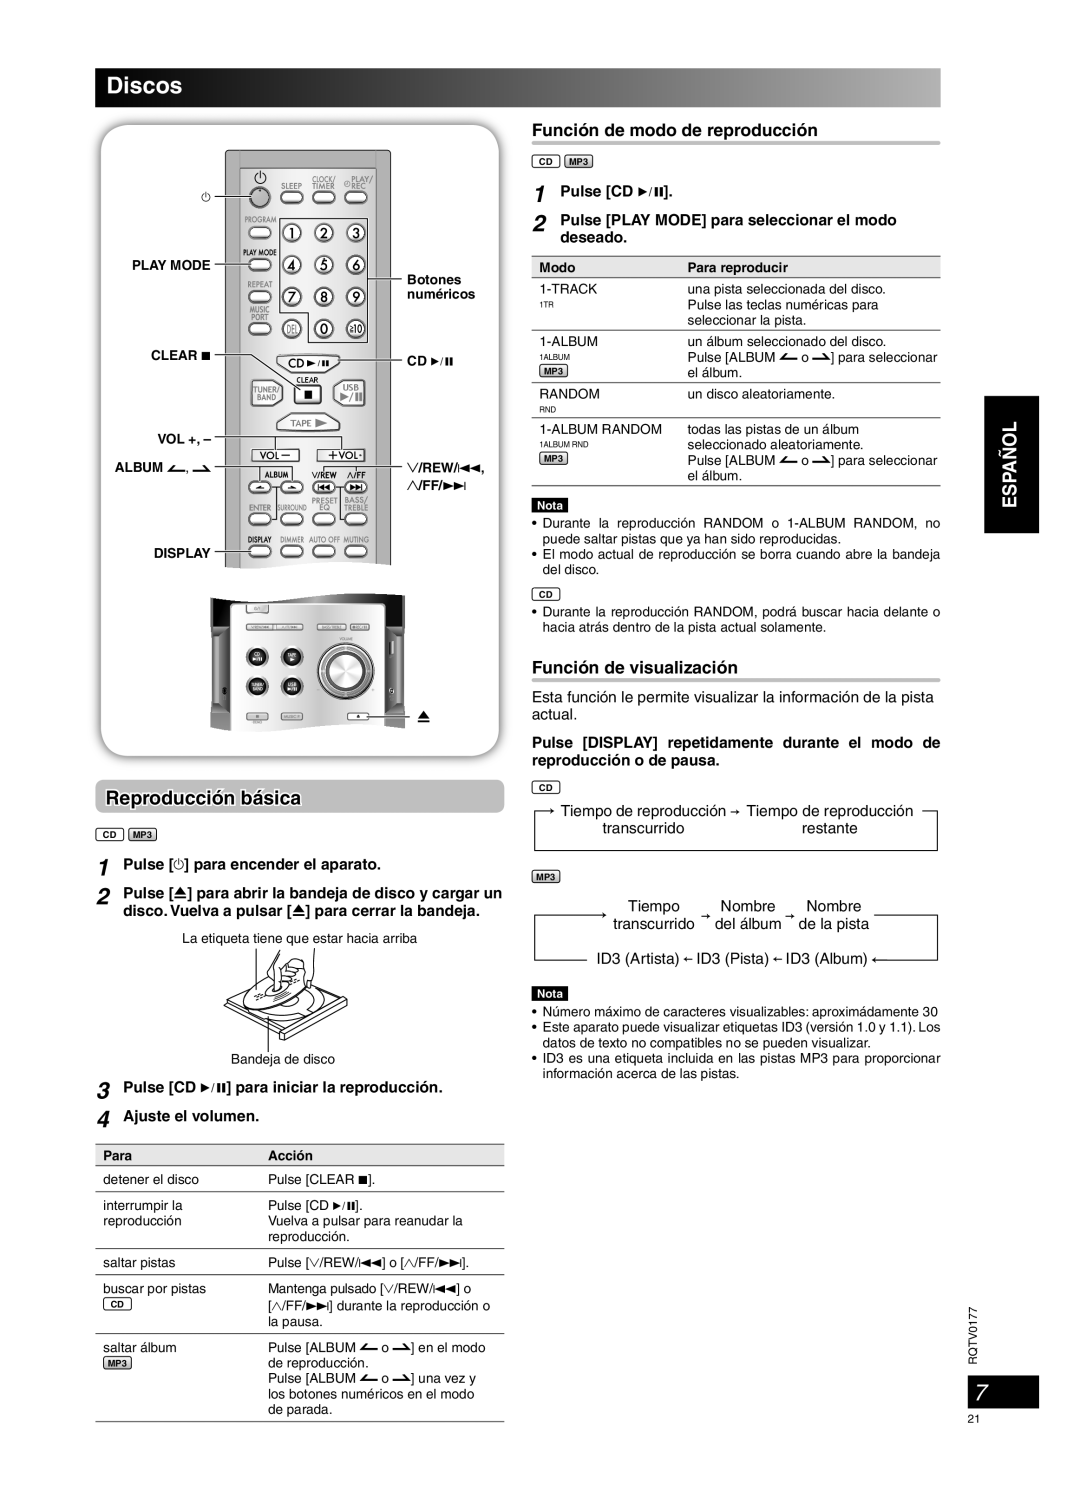 Panasonic SC-PM45 manual Discos, Reproducción básica, Función de modo de reproducción, Función de visualización, Español 